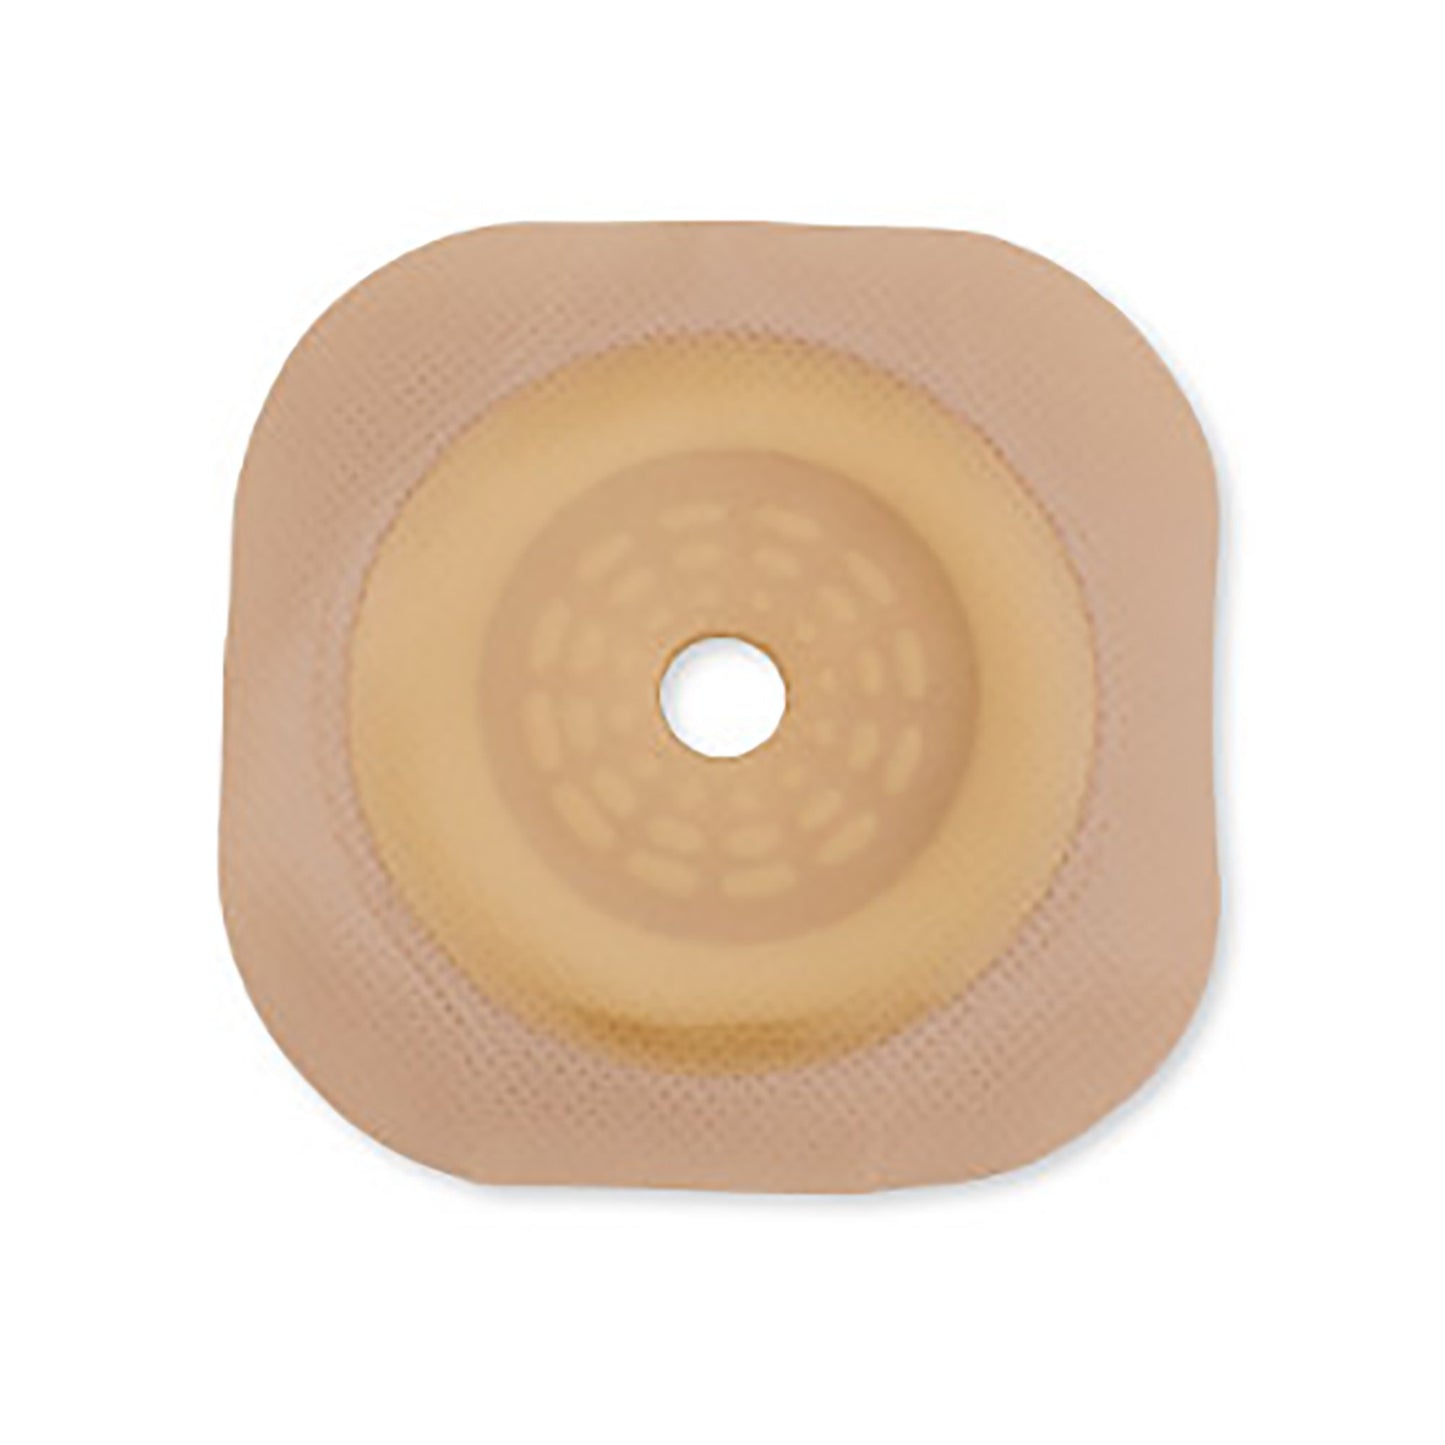 New Image Flat CeraPlus Skin Barrier, Extended Wear, Beige, 2.25" Flange, 1.75" Opening, 5 ct